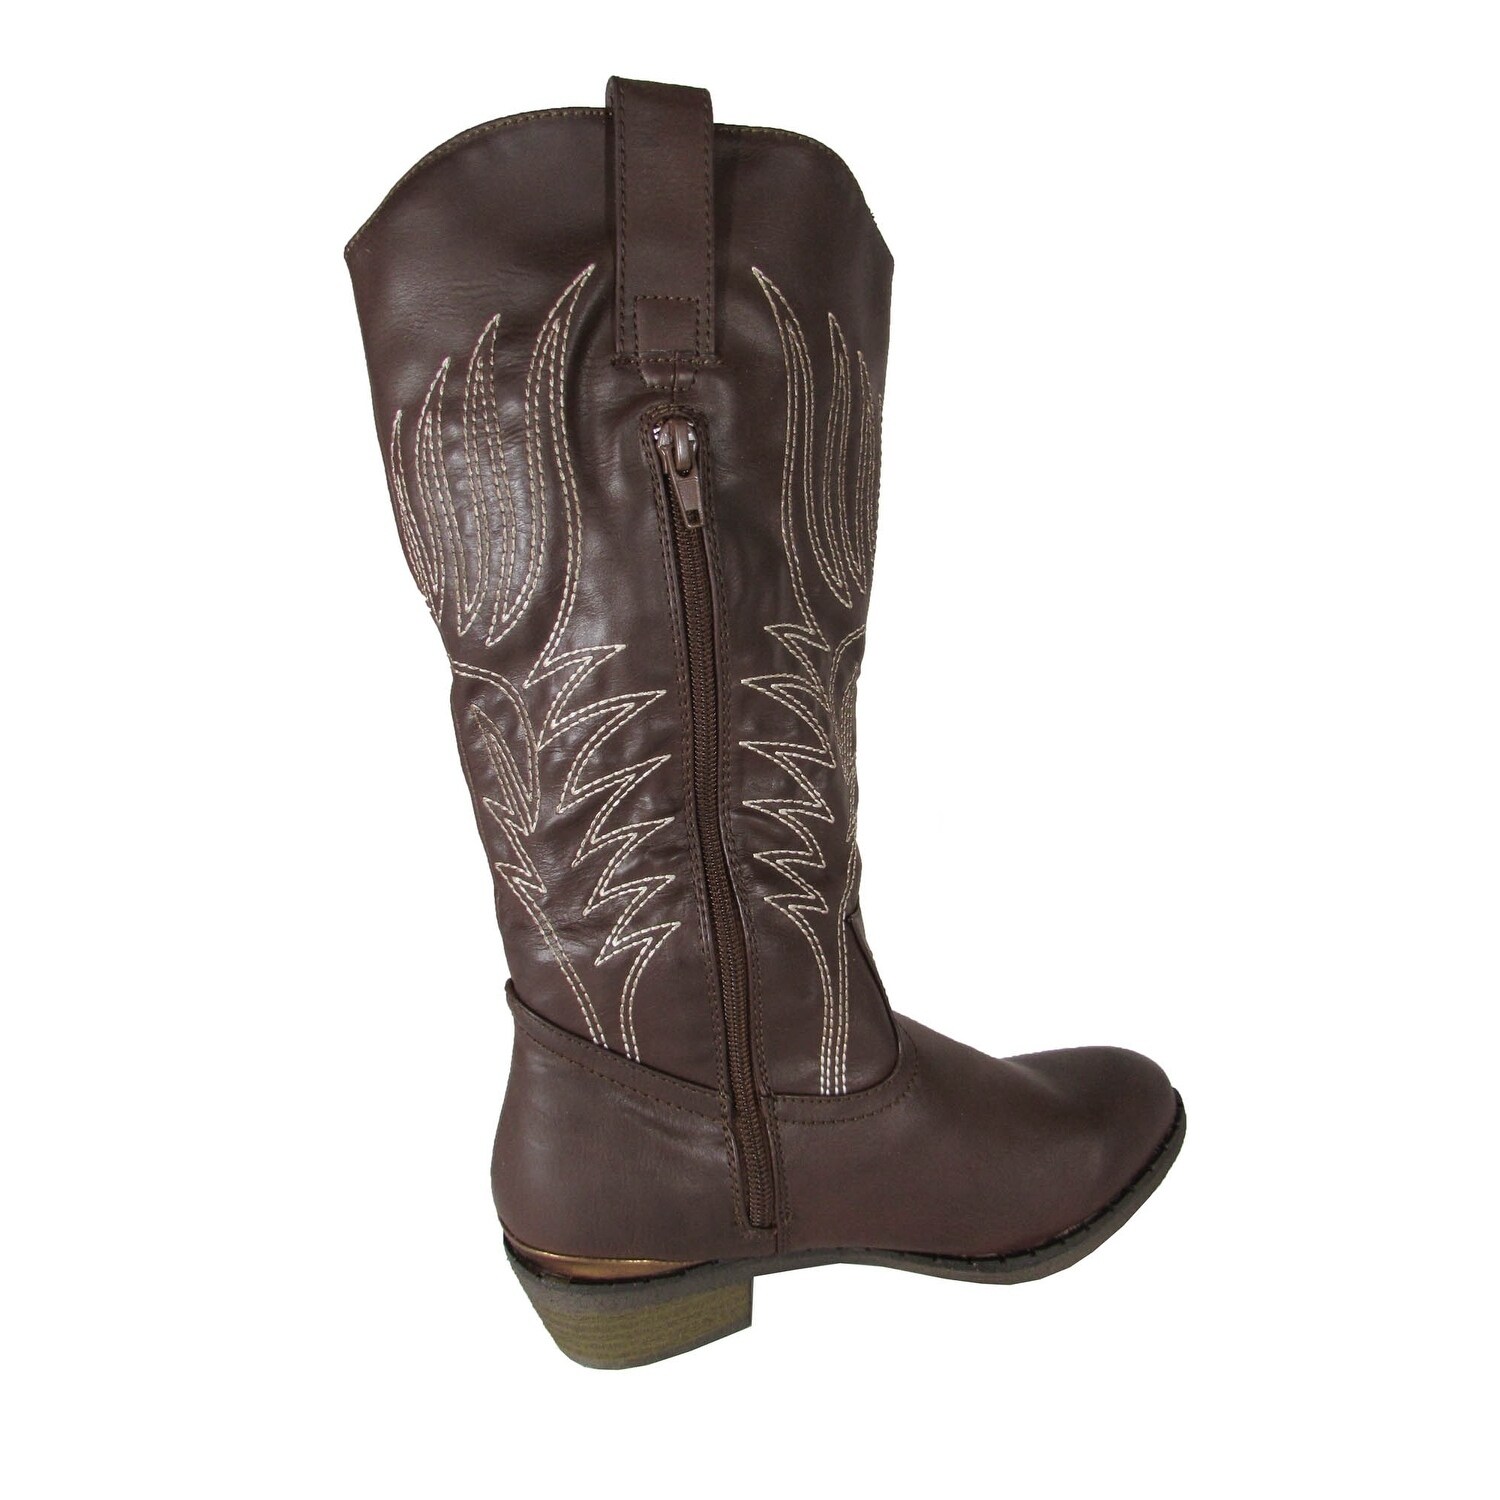 mustang boots women's sale